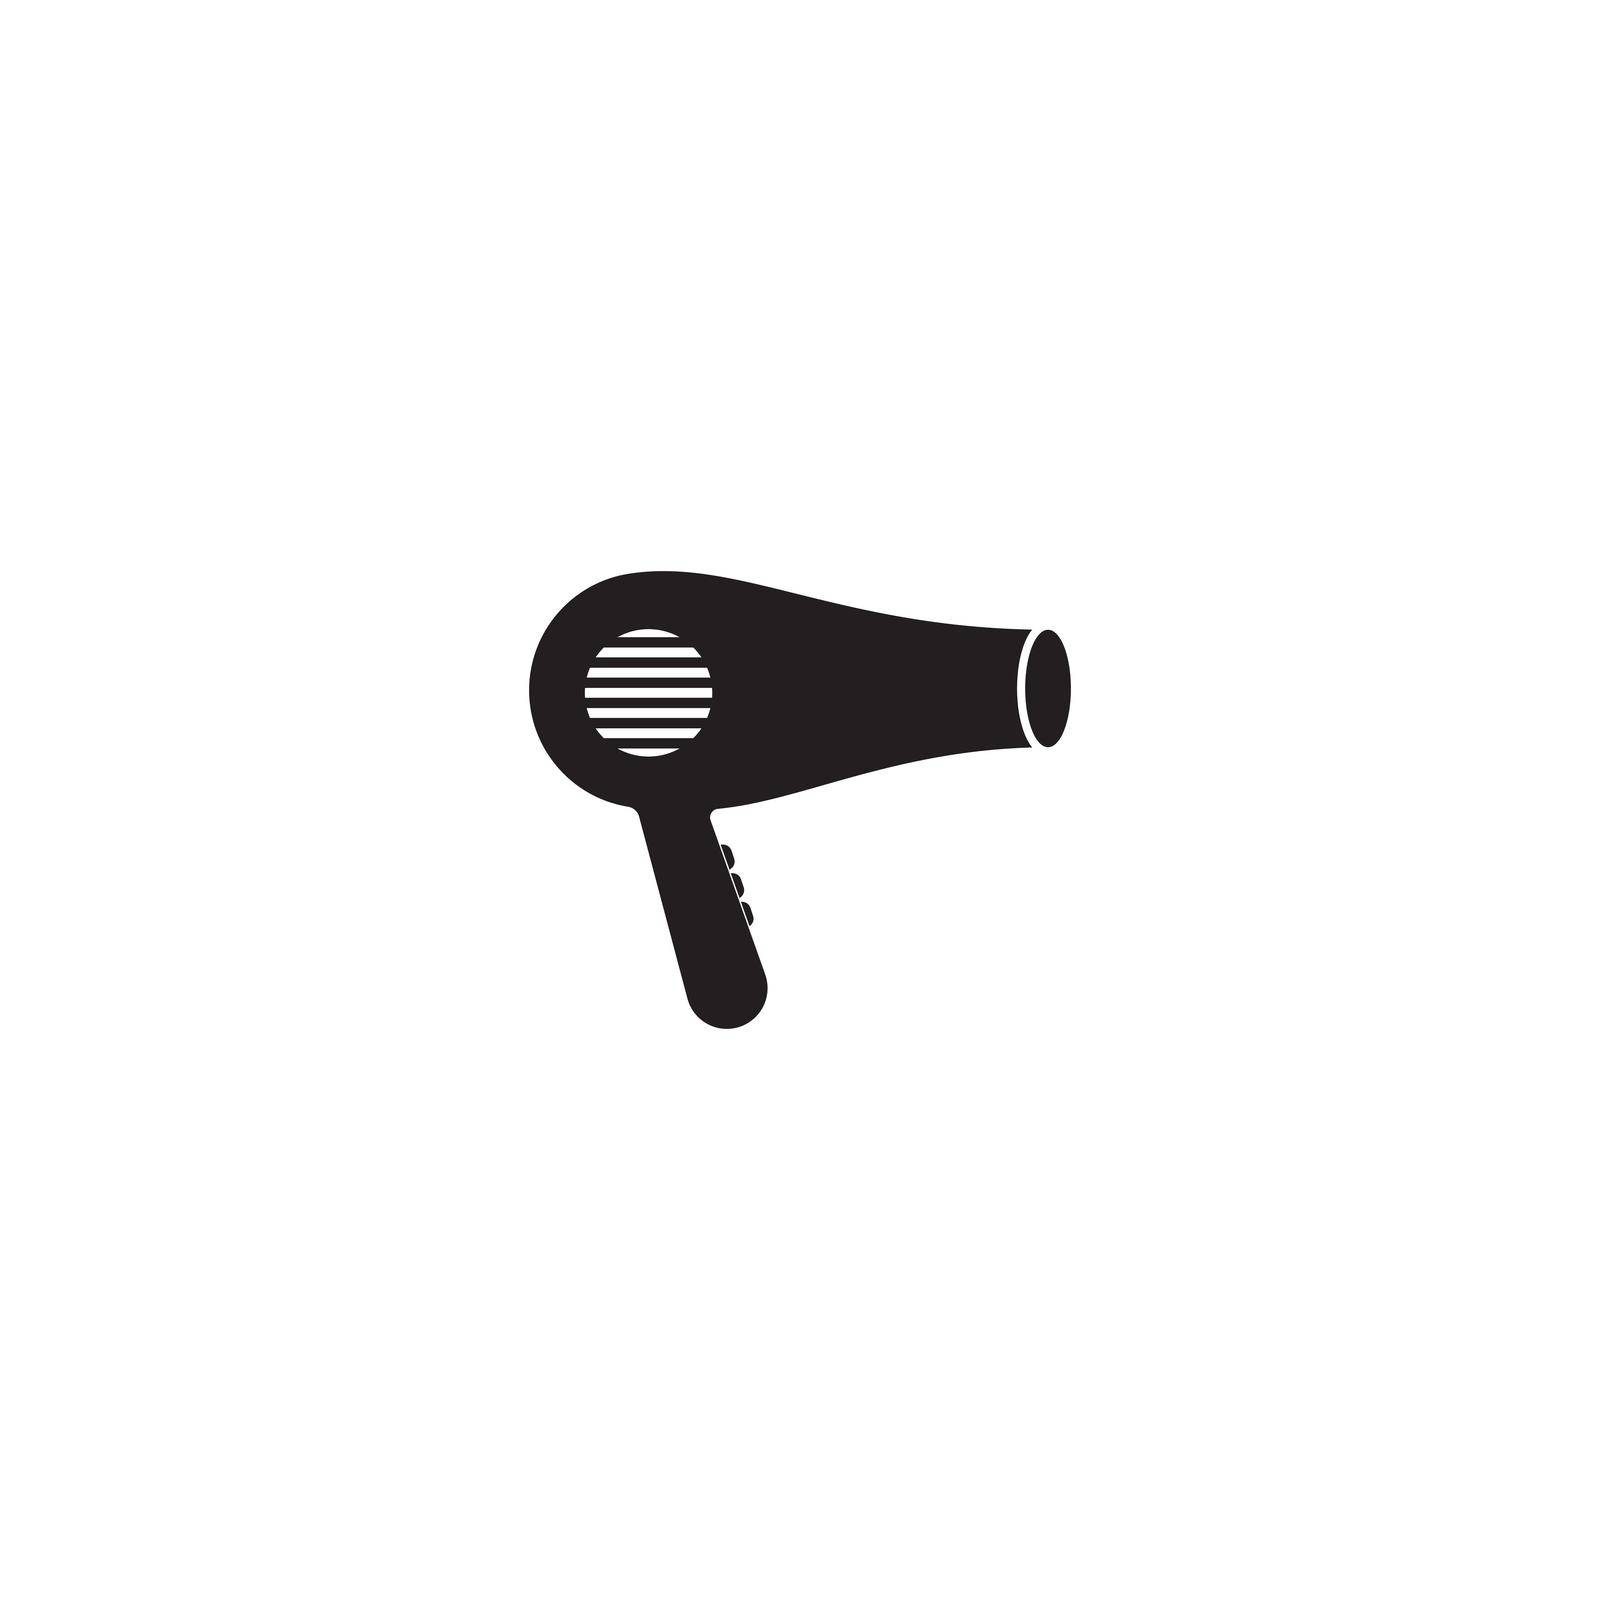 Hair dryer logo by rnking